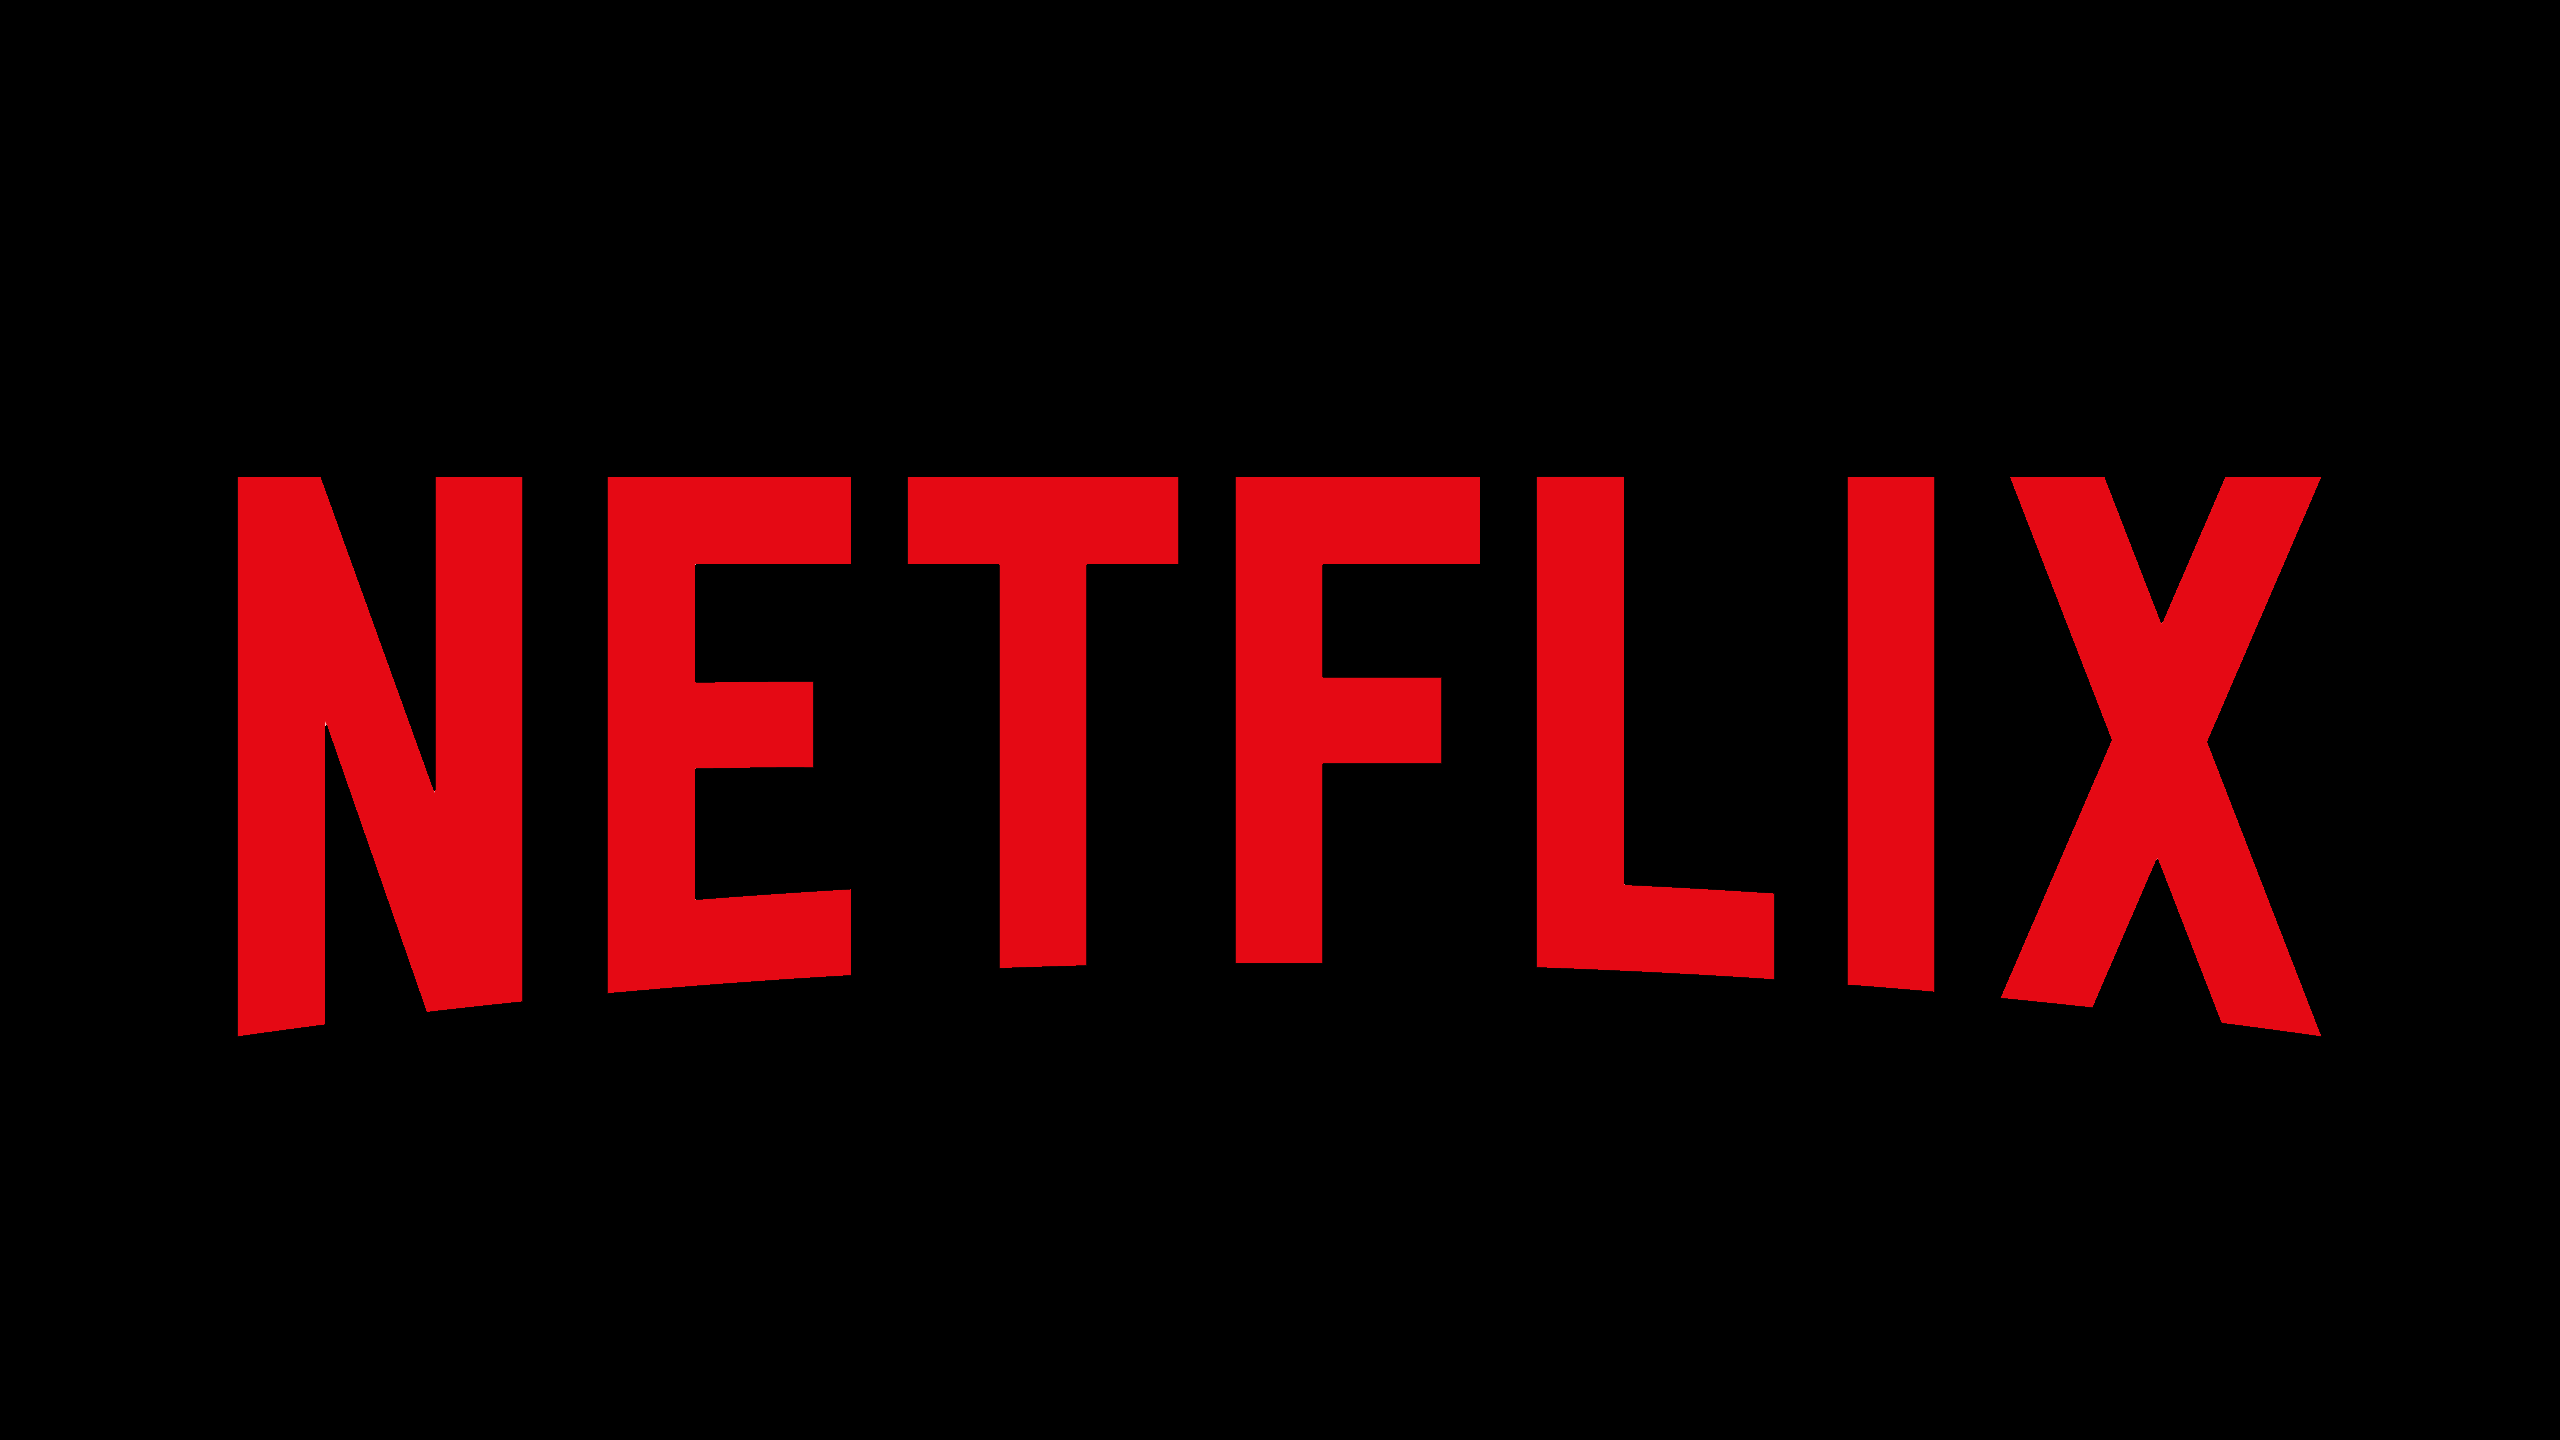 Códigos Secretos da Netflix